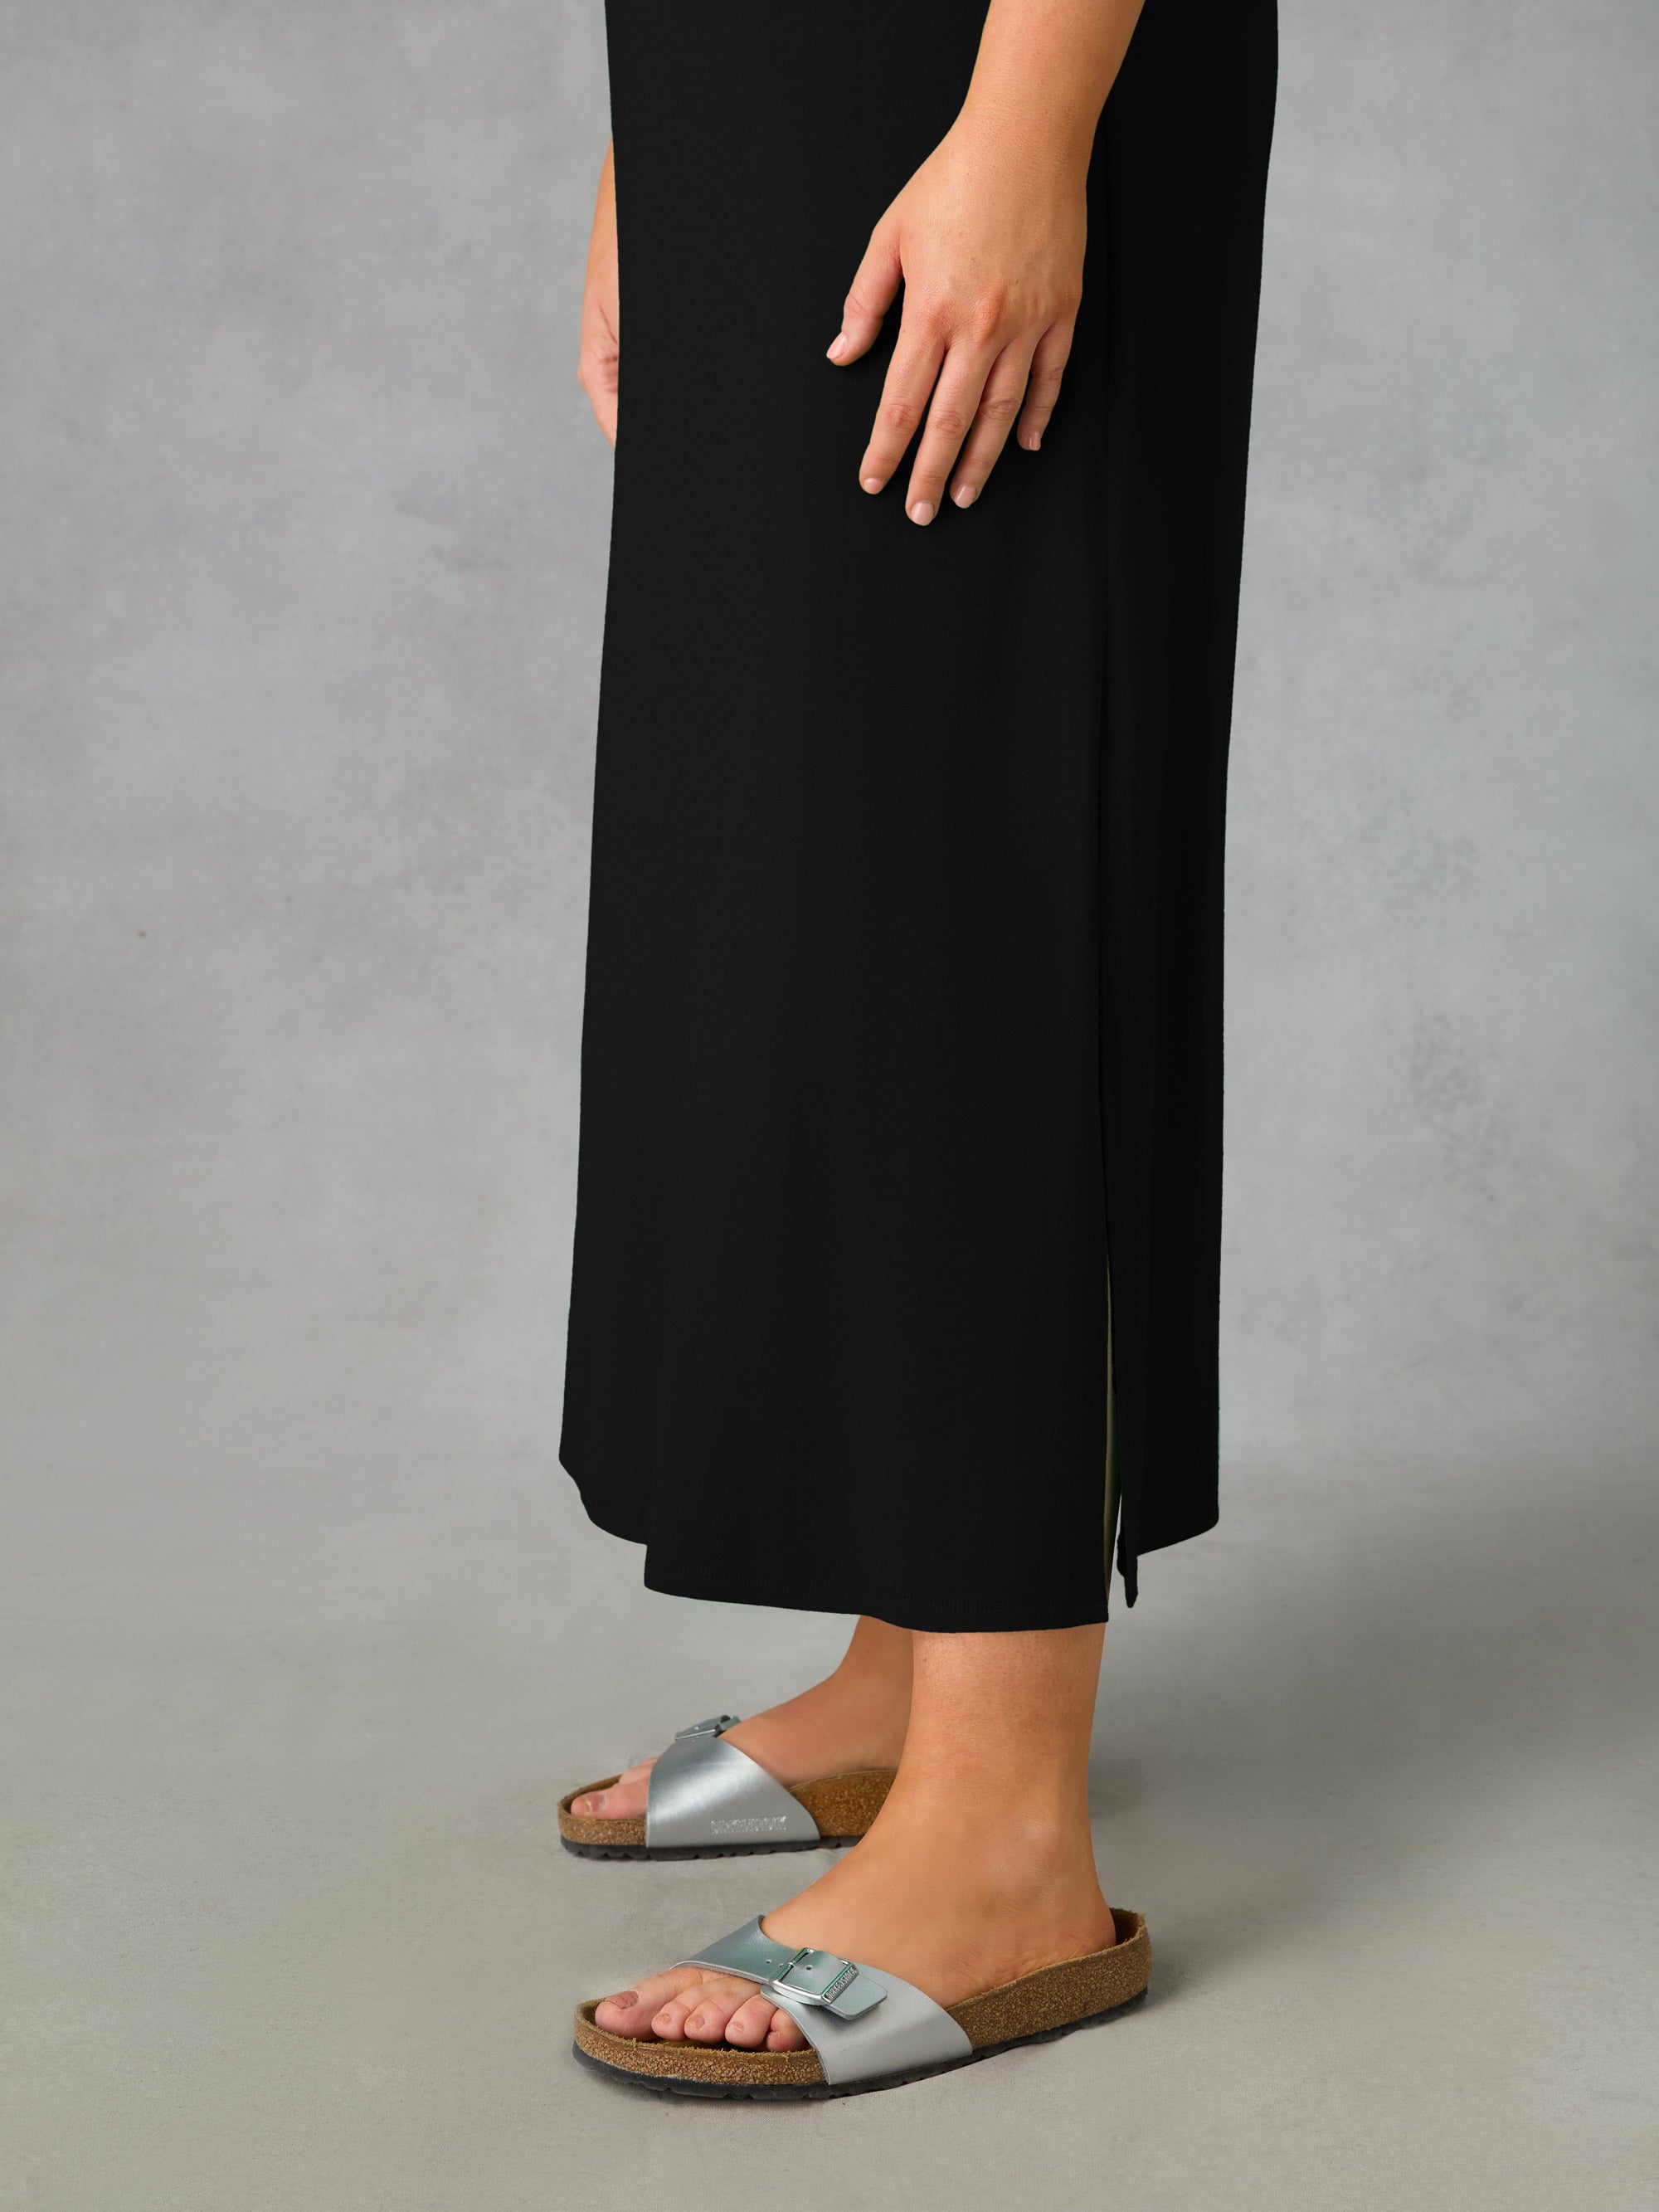 Petite Black Jersey Midaxi T-Shirt Dress